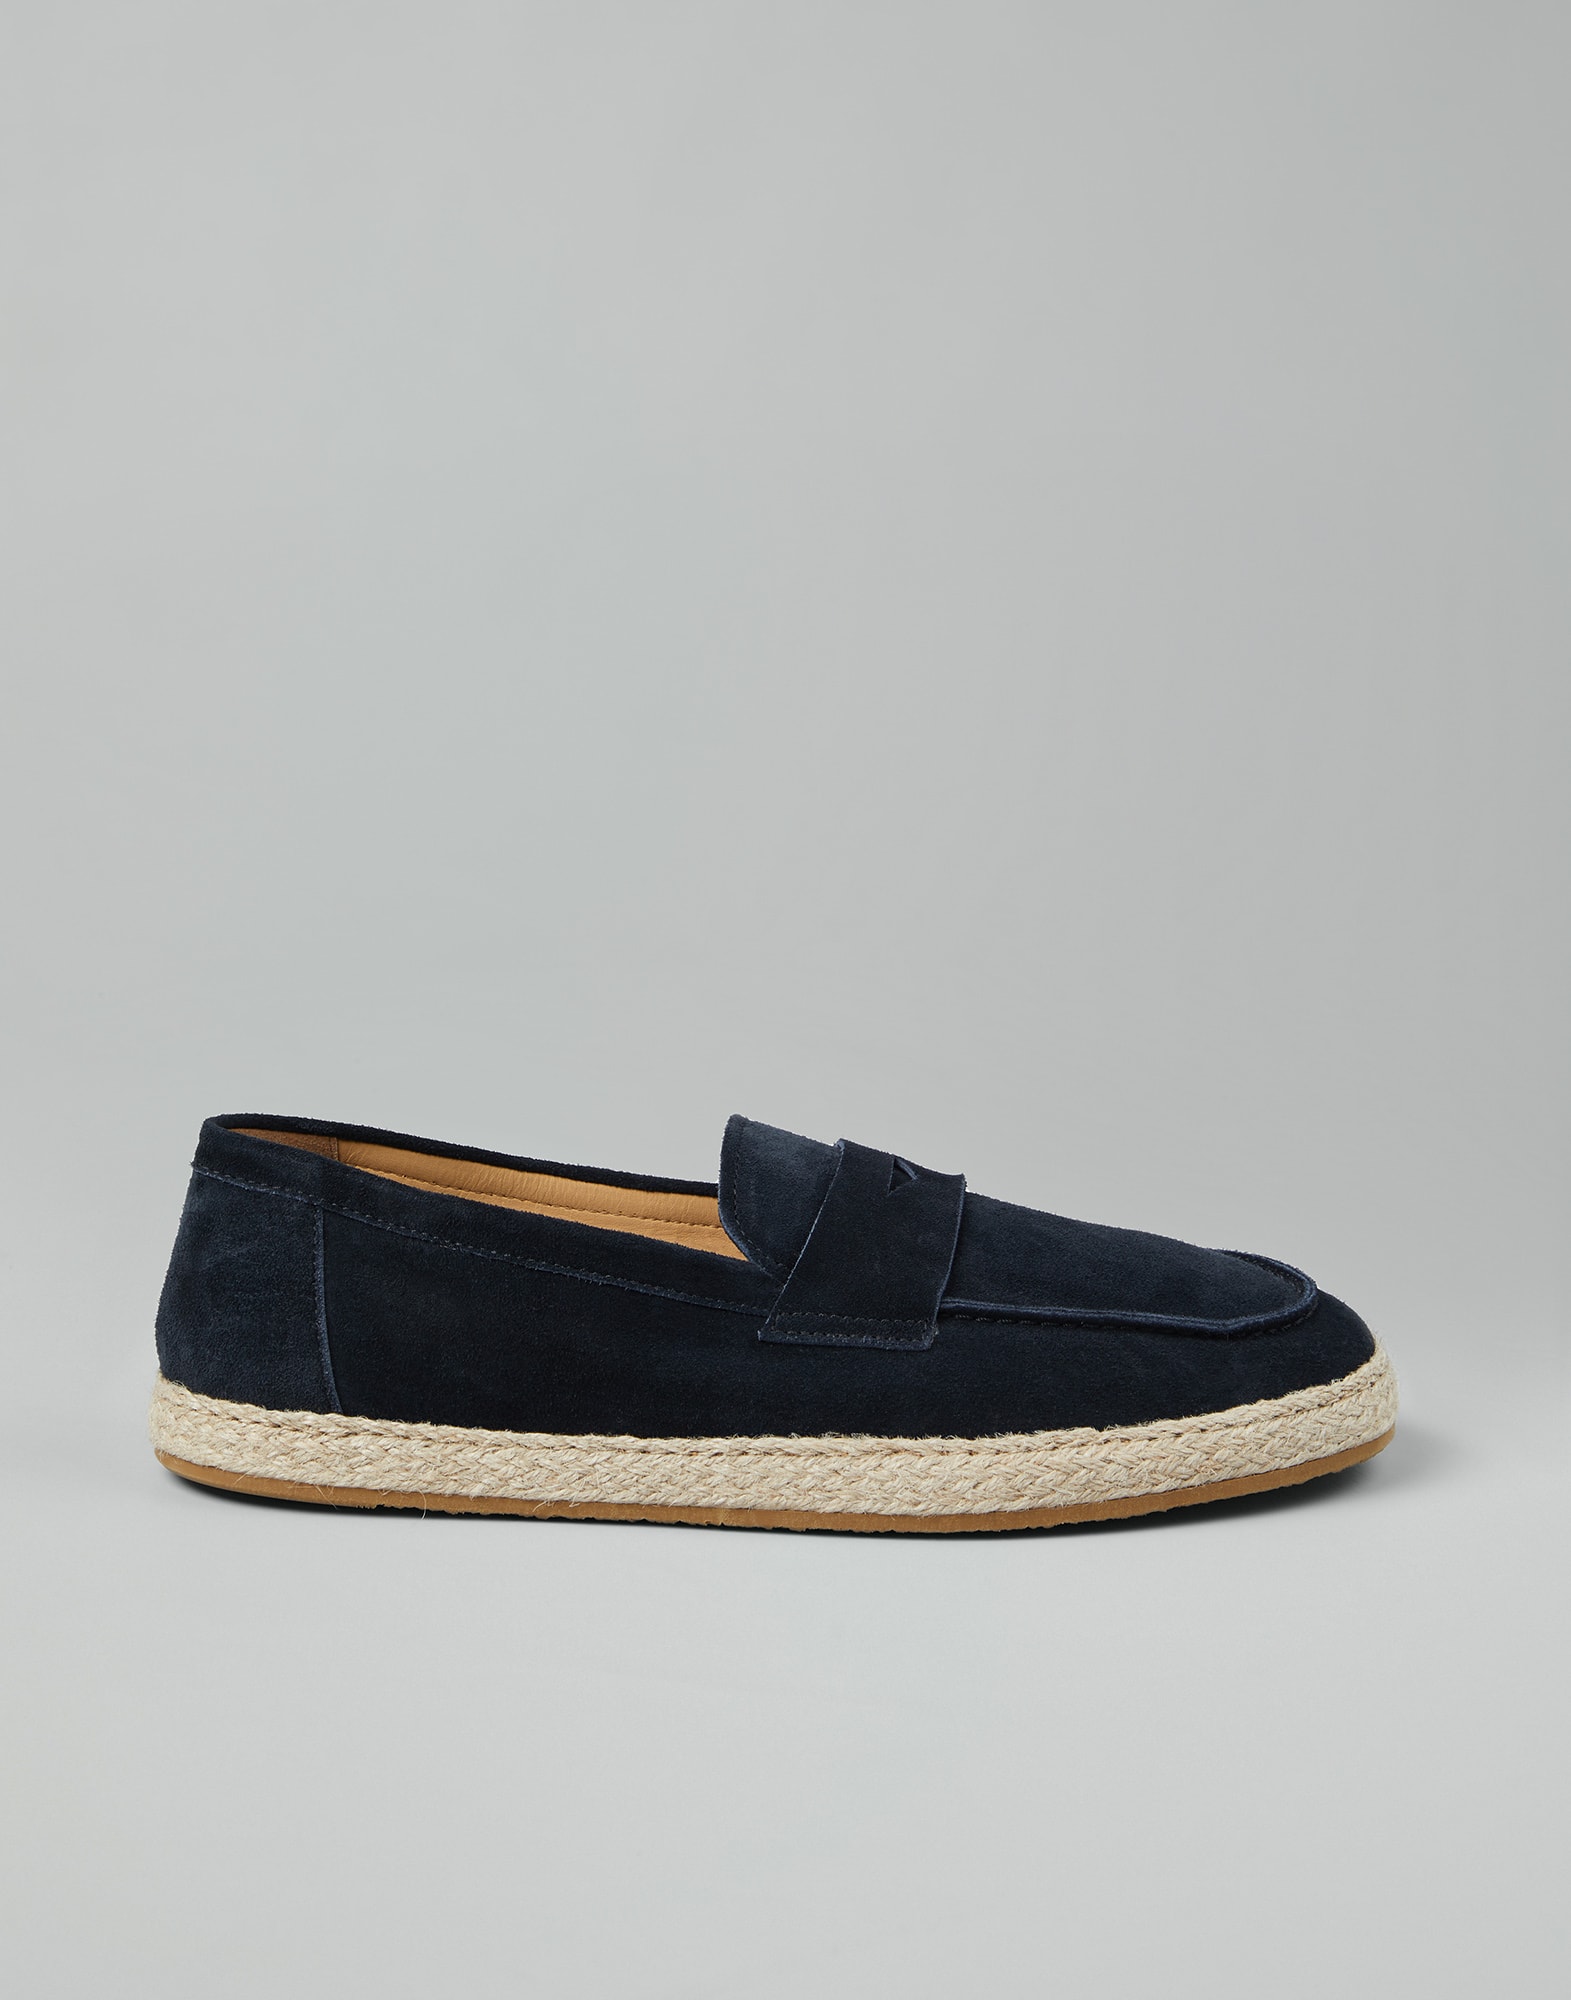 Suede loafers (241MZUSILI701) for Man | Brunello Cucinelli